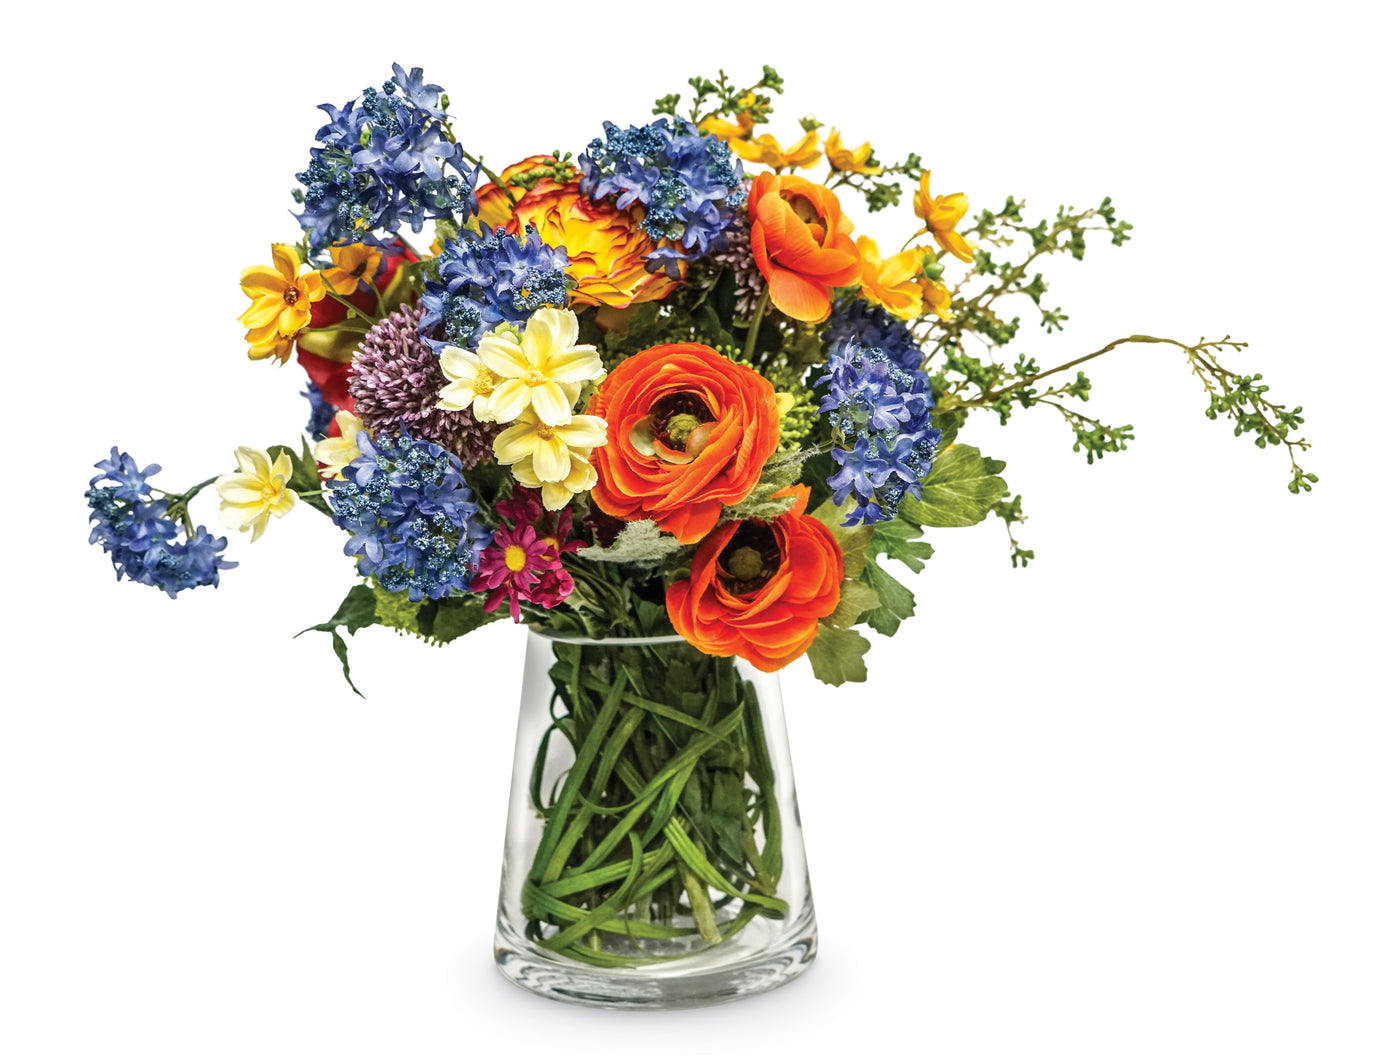 Vibrant Bouquet in Glass Vase